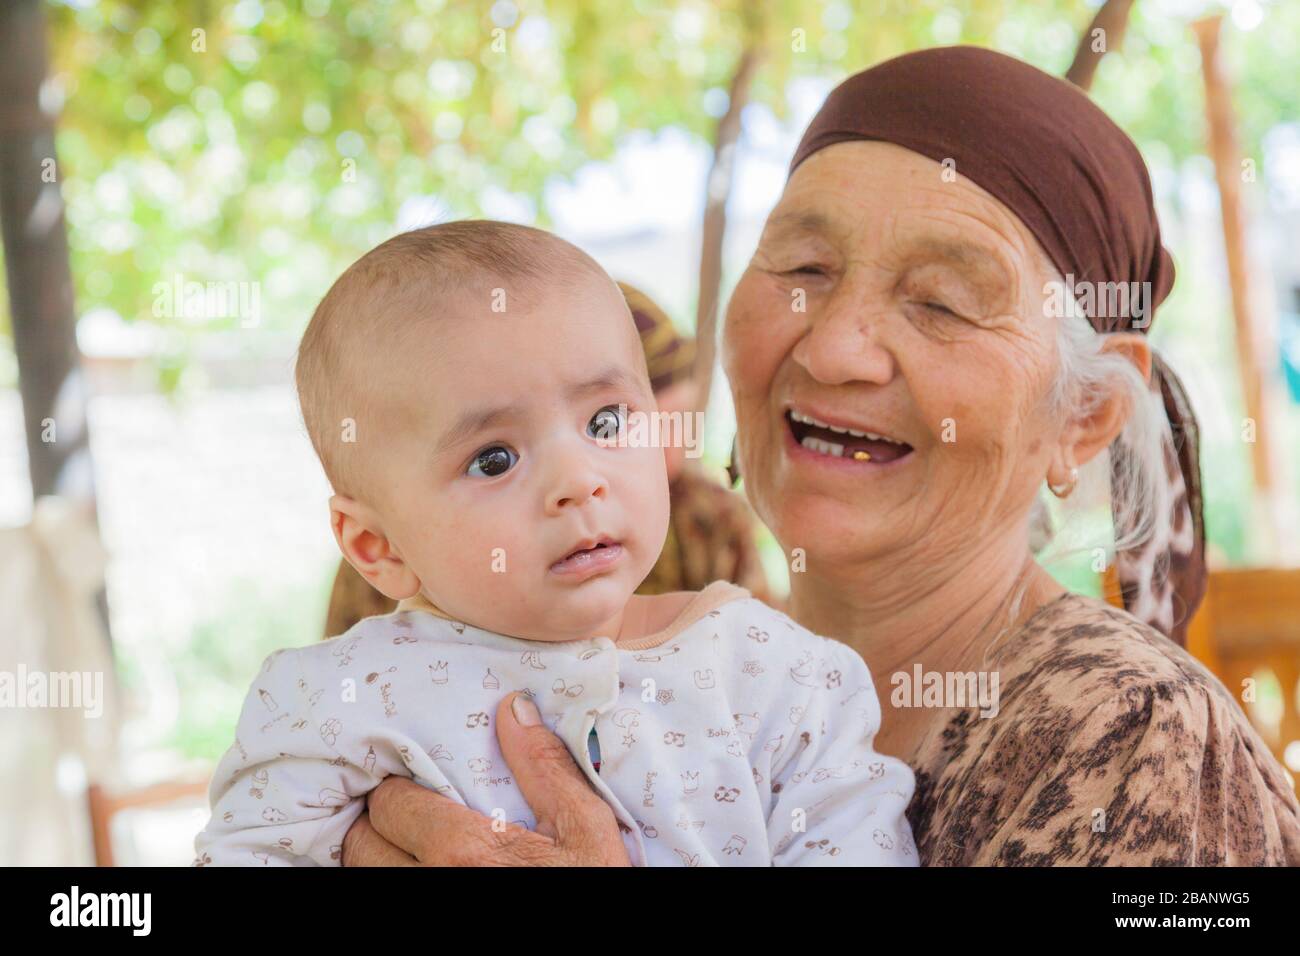 Grand mother and children, Derbent or Derbend, Surxondaryo Region, Uzbekistan, Central Asia, Asia Stock Photo